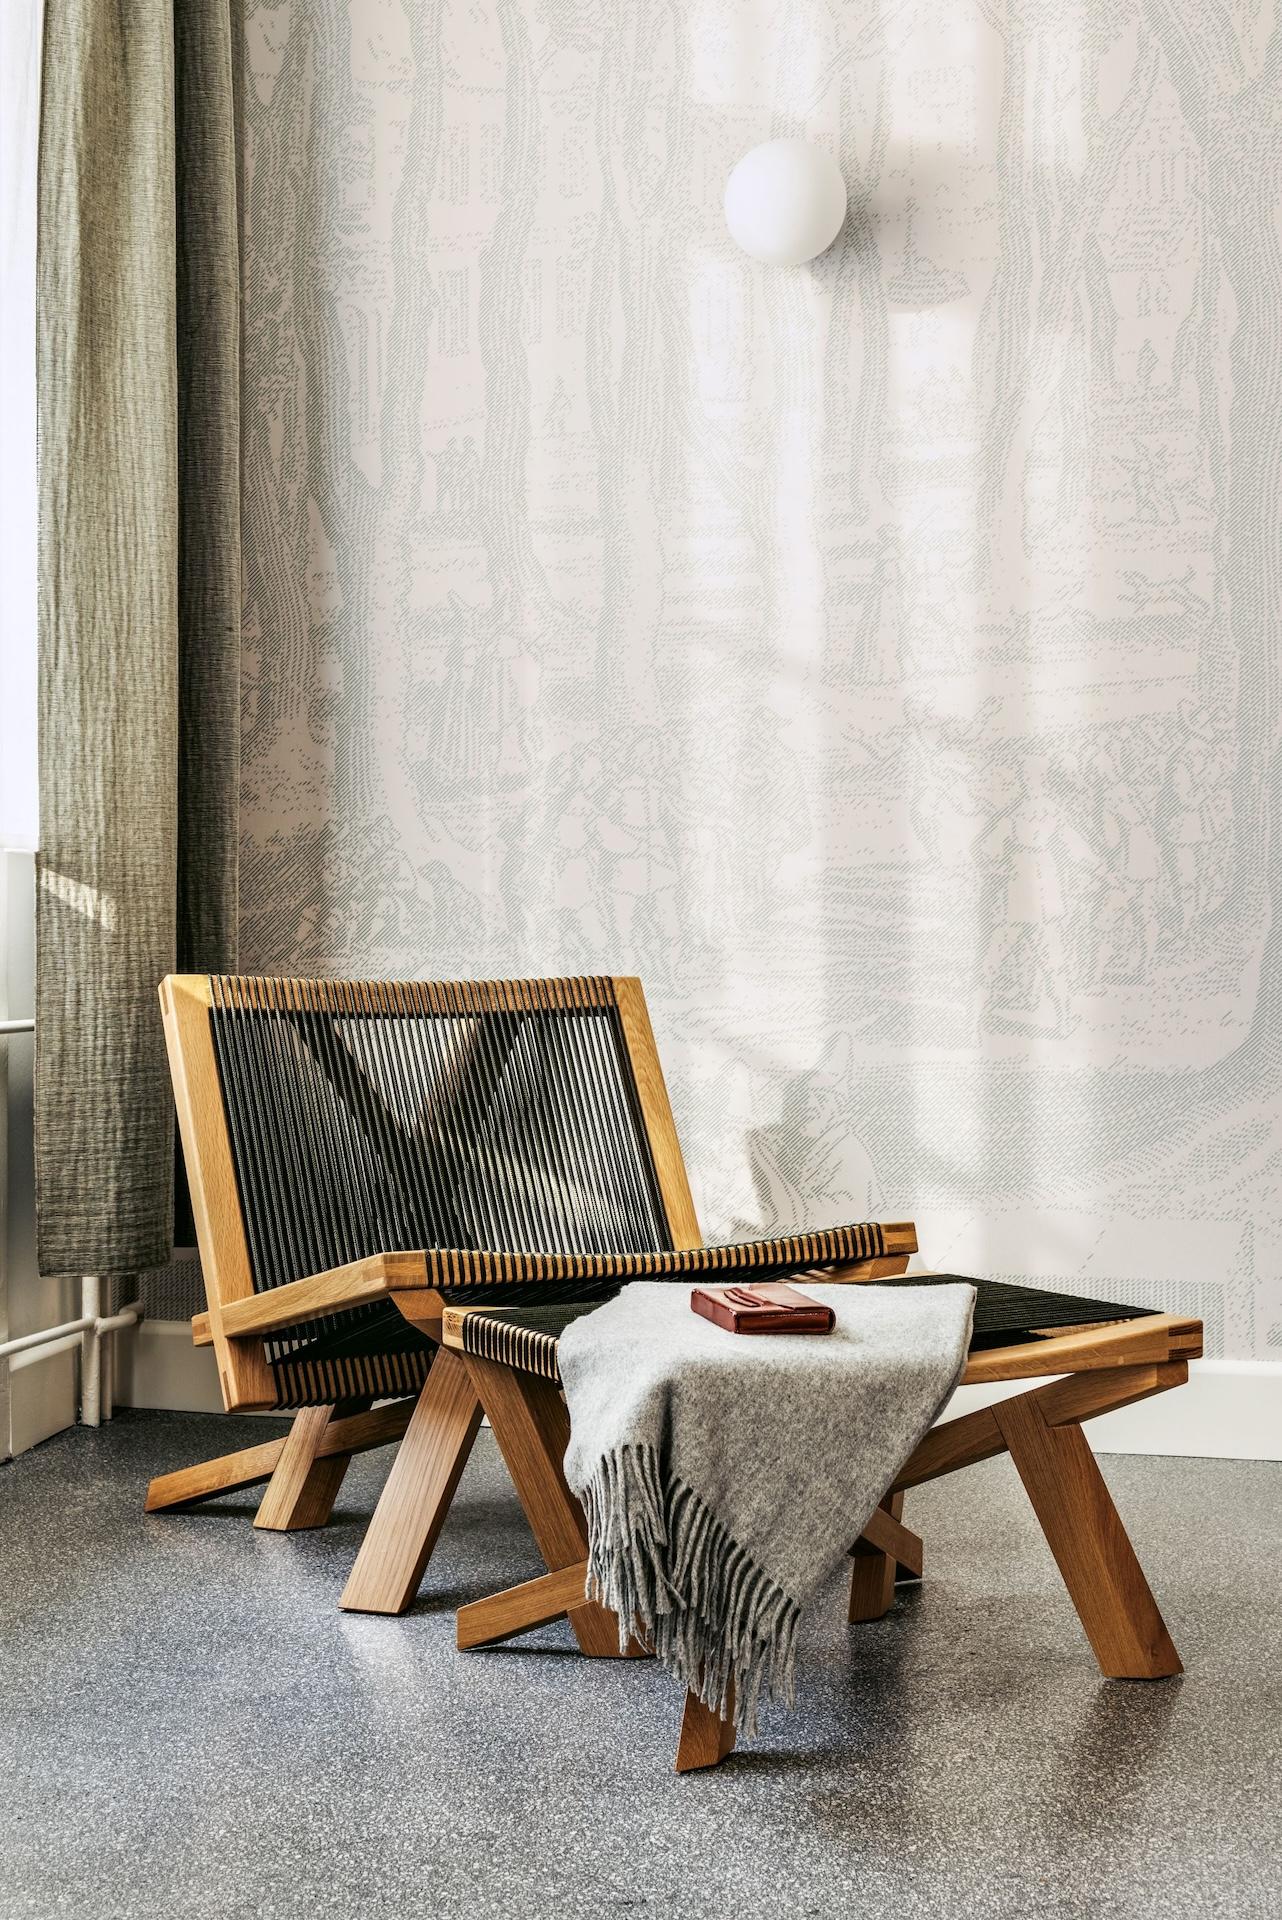 European Volkshaus Lounge Chair by Herzog & de Meuron For Sale